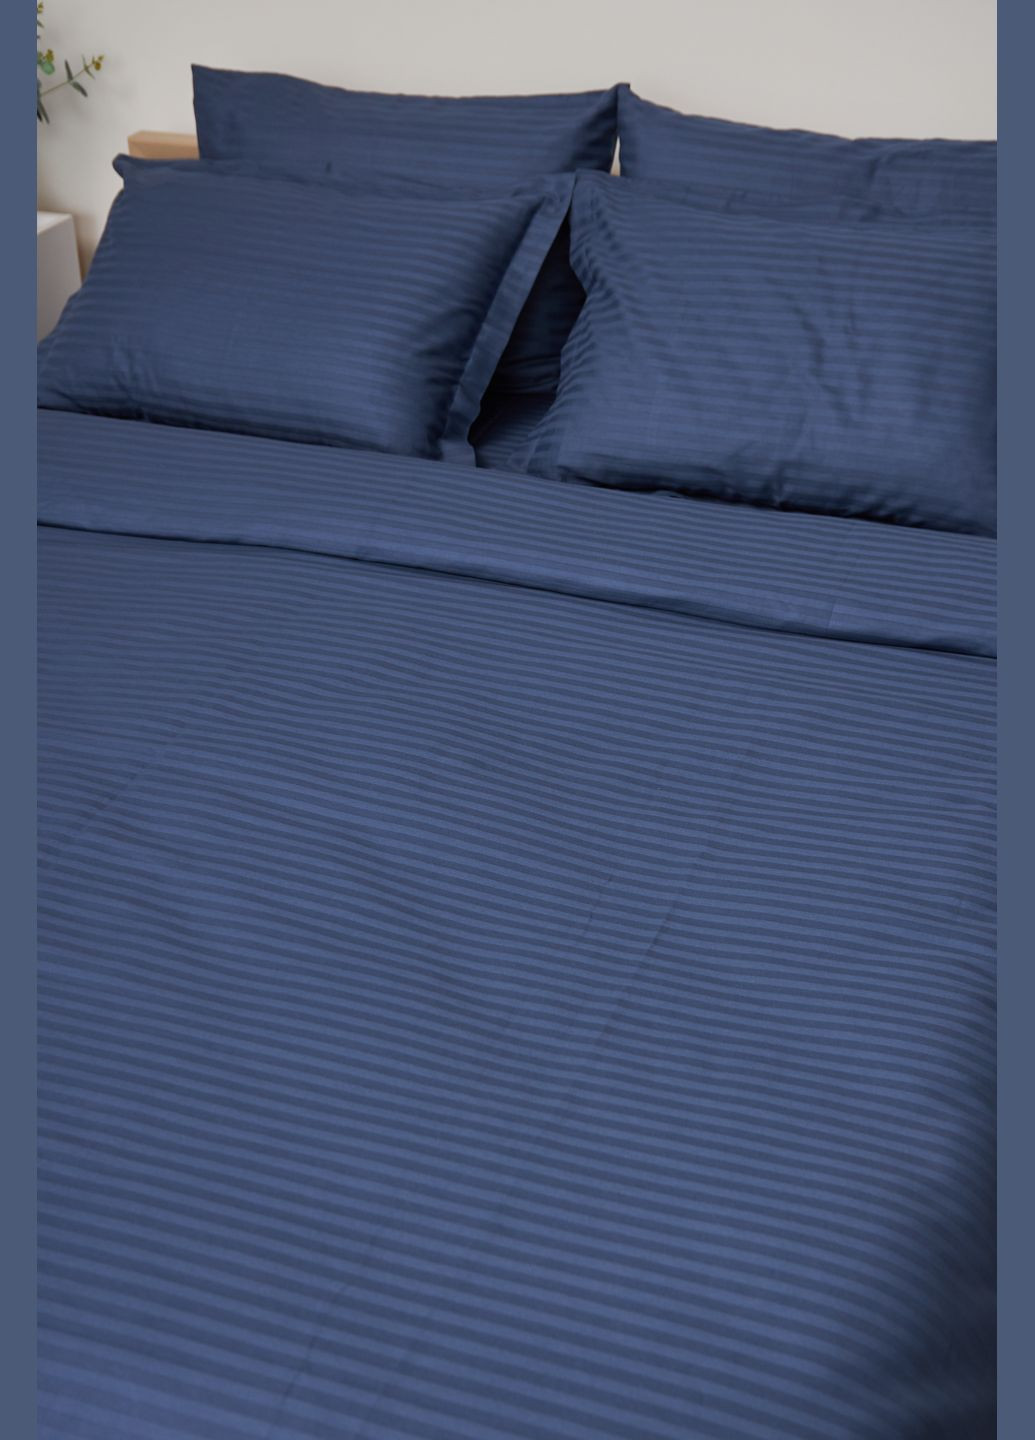 Комплект постельного белья полуторный евро 160х220 наволочки 2х70х70 Satin Stripe (MS-820000512) Moon&Star delfi blue (284416169)